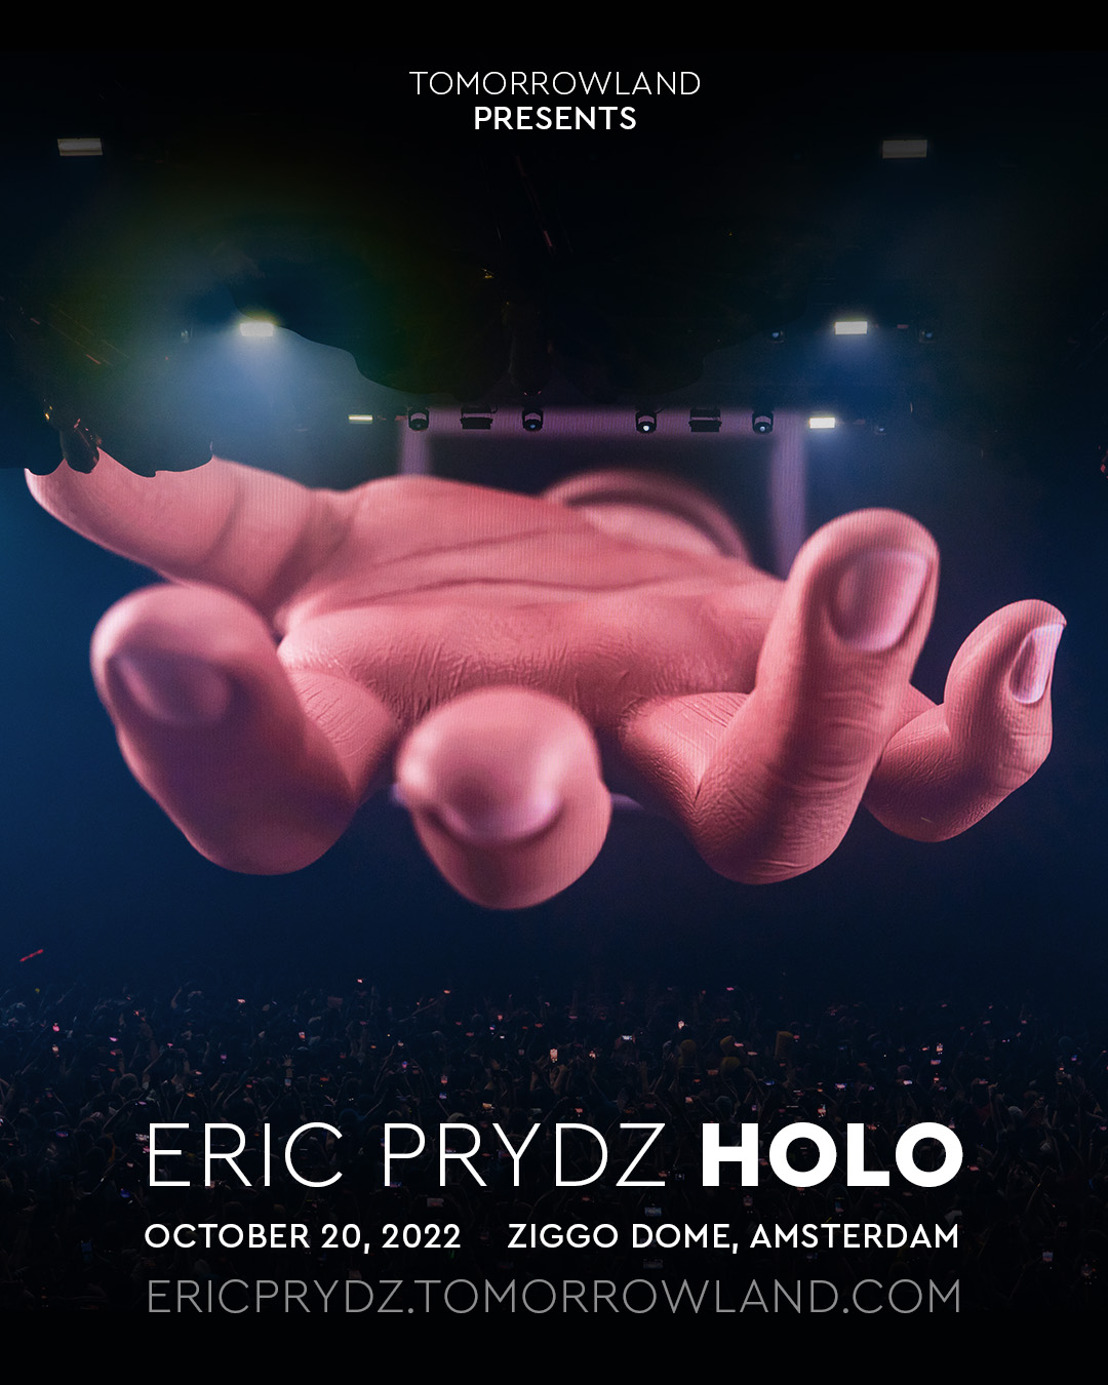 « Tomorrowland presents Eric Prydz HOLO » à l'Amsterdam Dance Event